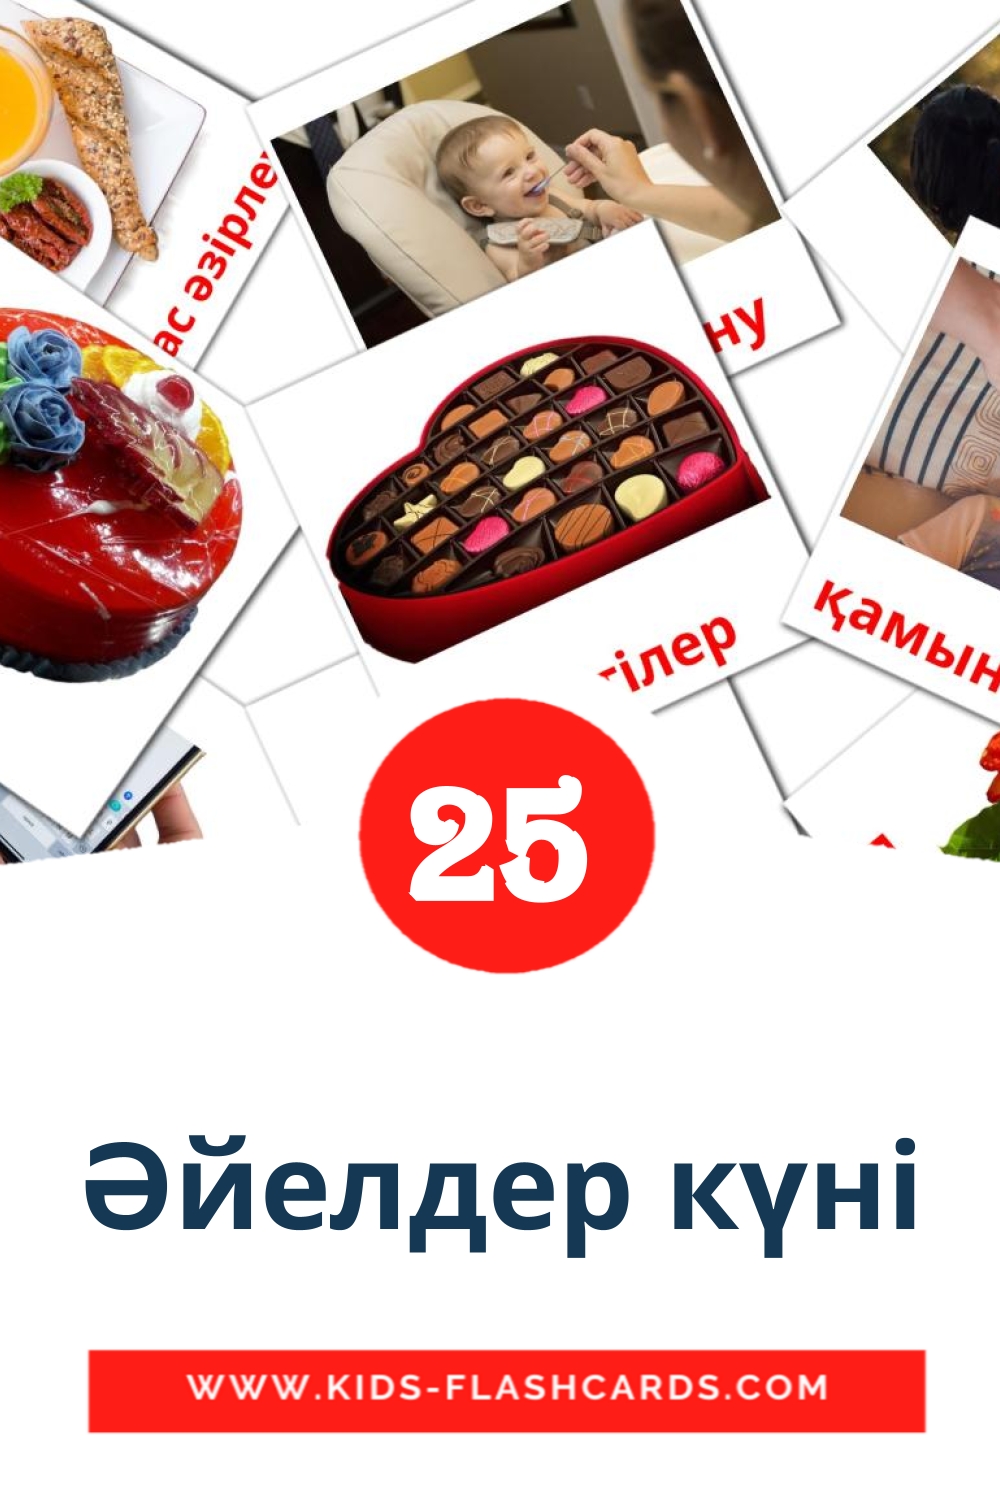 25 carte illustrate di Әйелдер күні per la scuola materna in kazakh